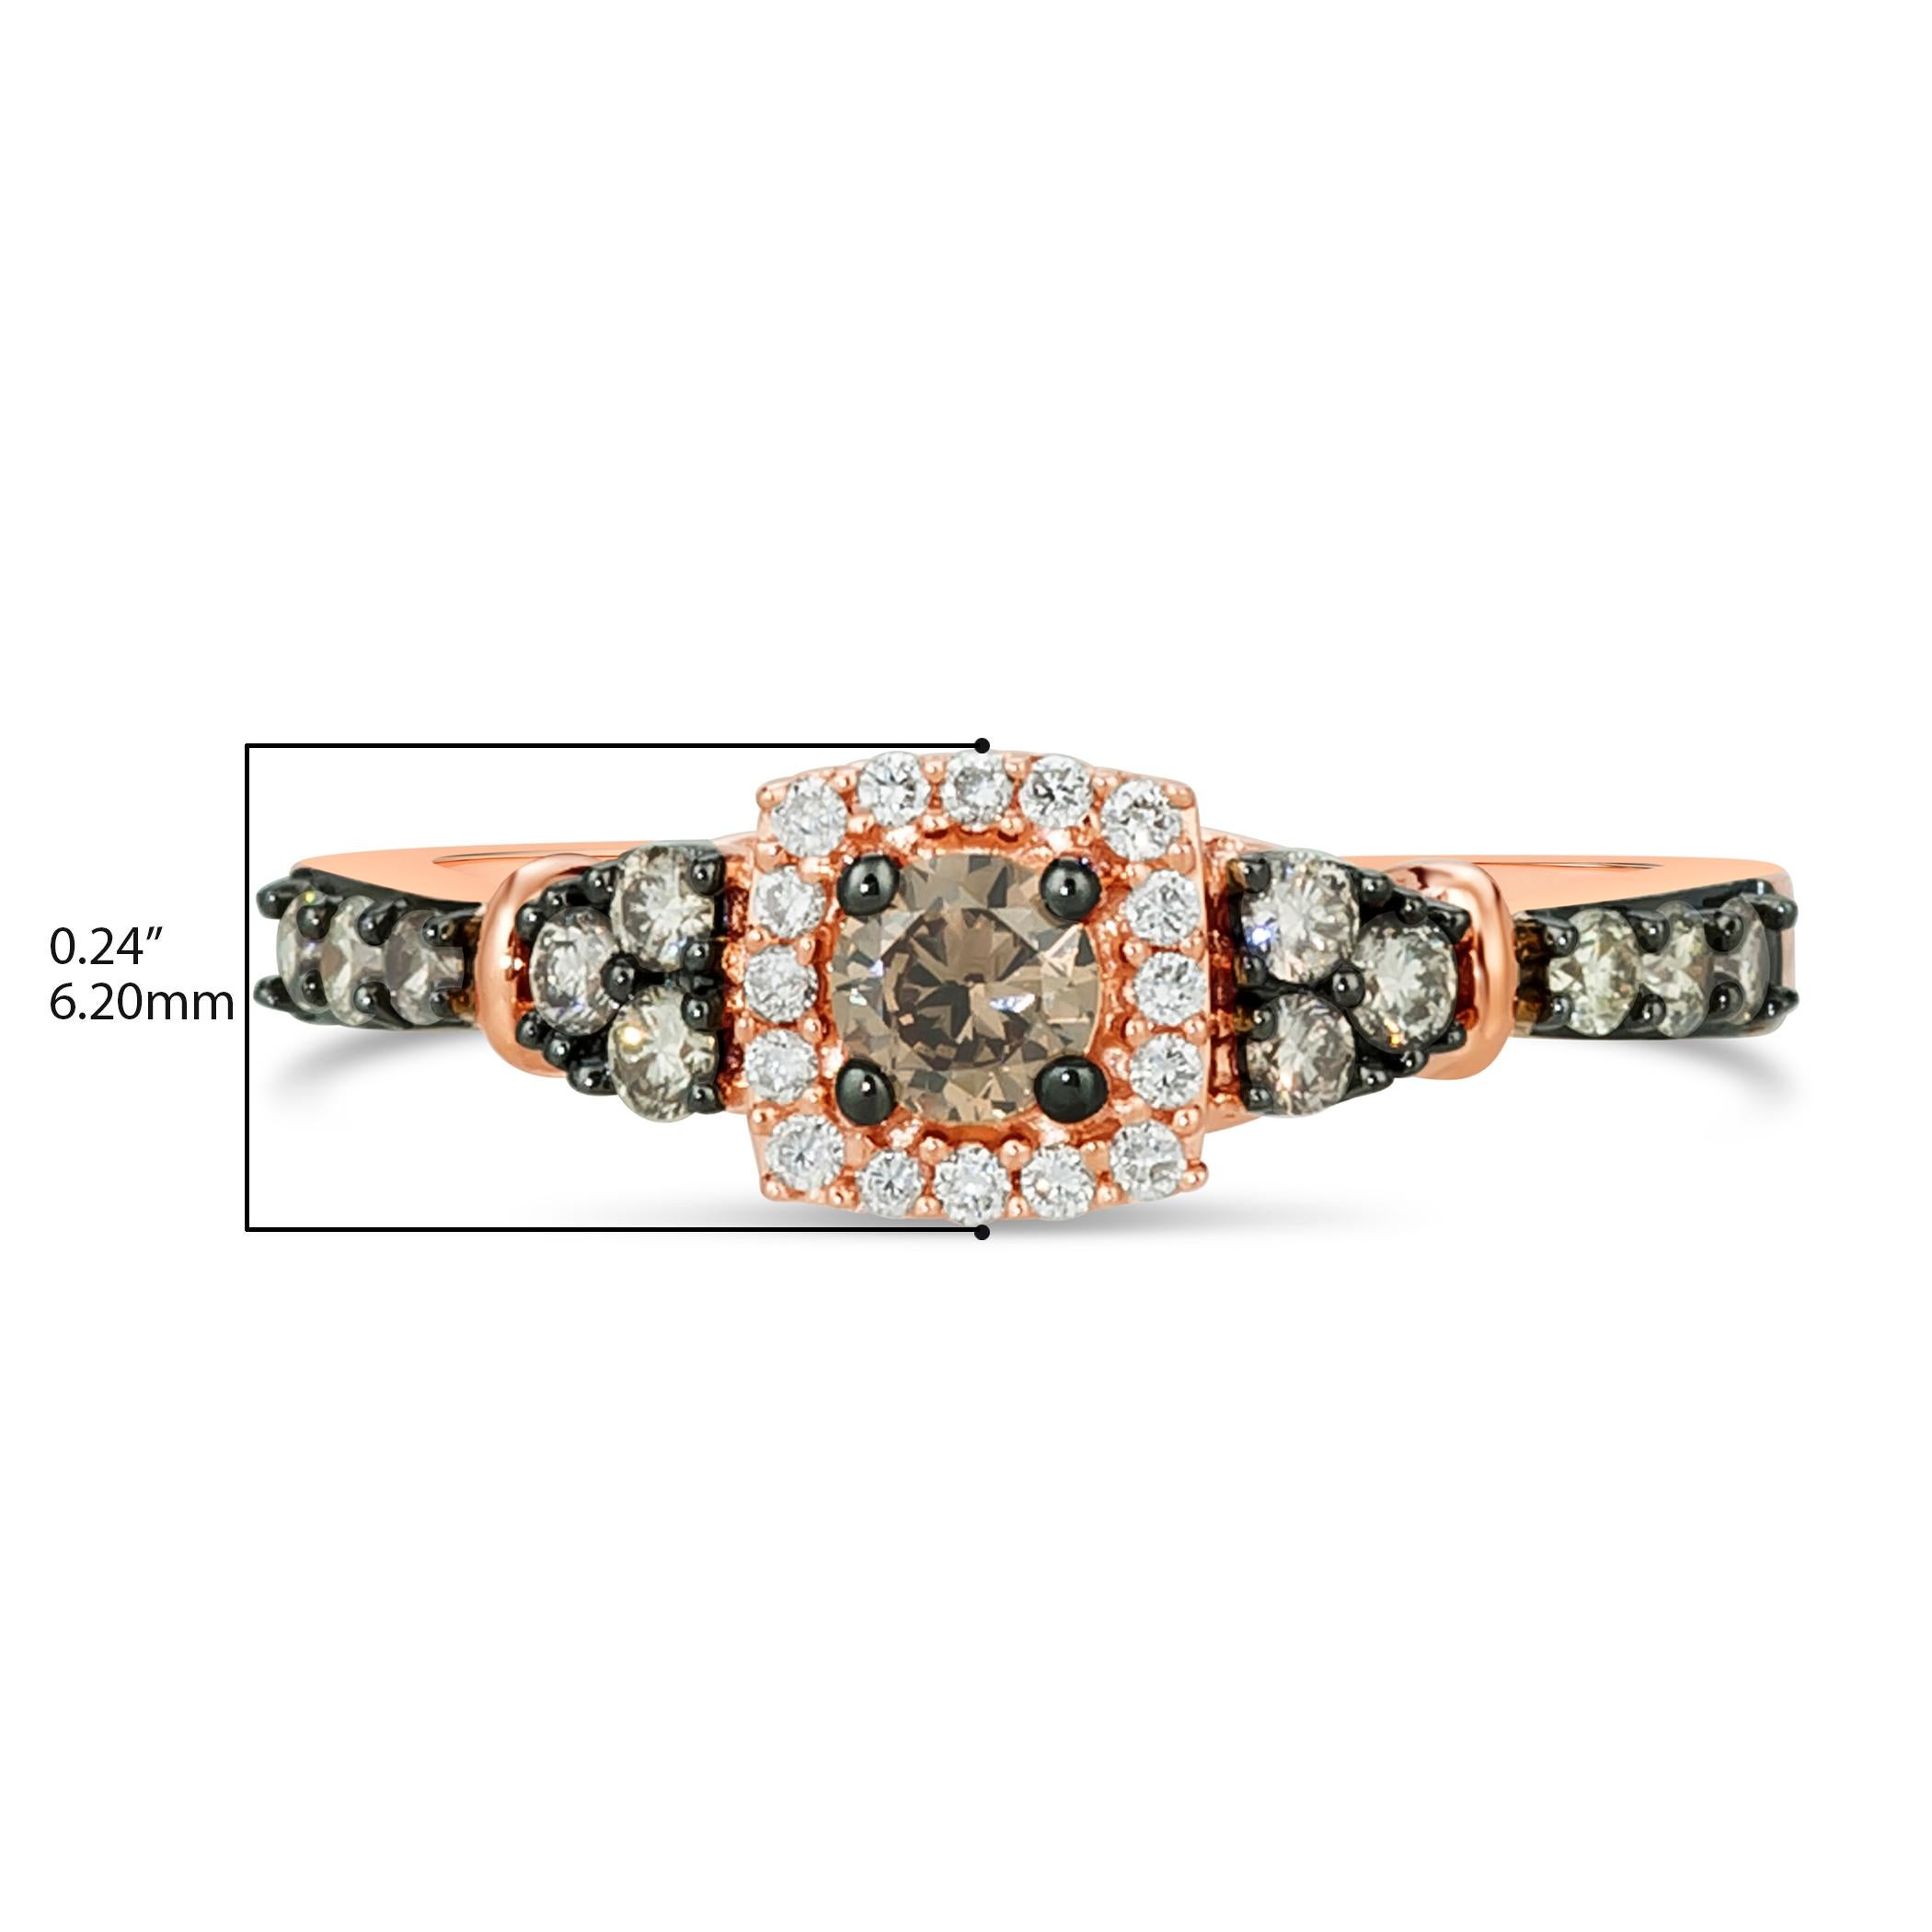 LeVian 14K Rose Gold White/Chocolate Diamond Halo Fashion Ring - Size 7.5